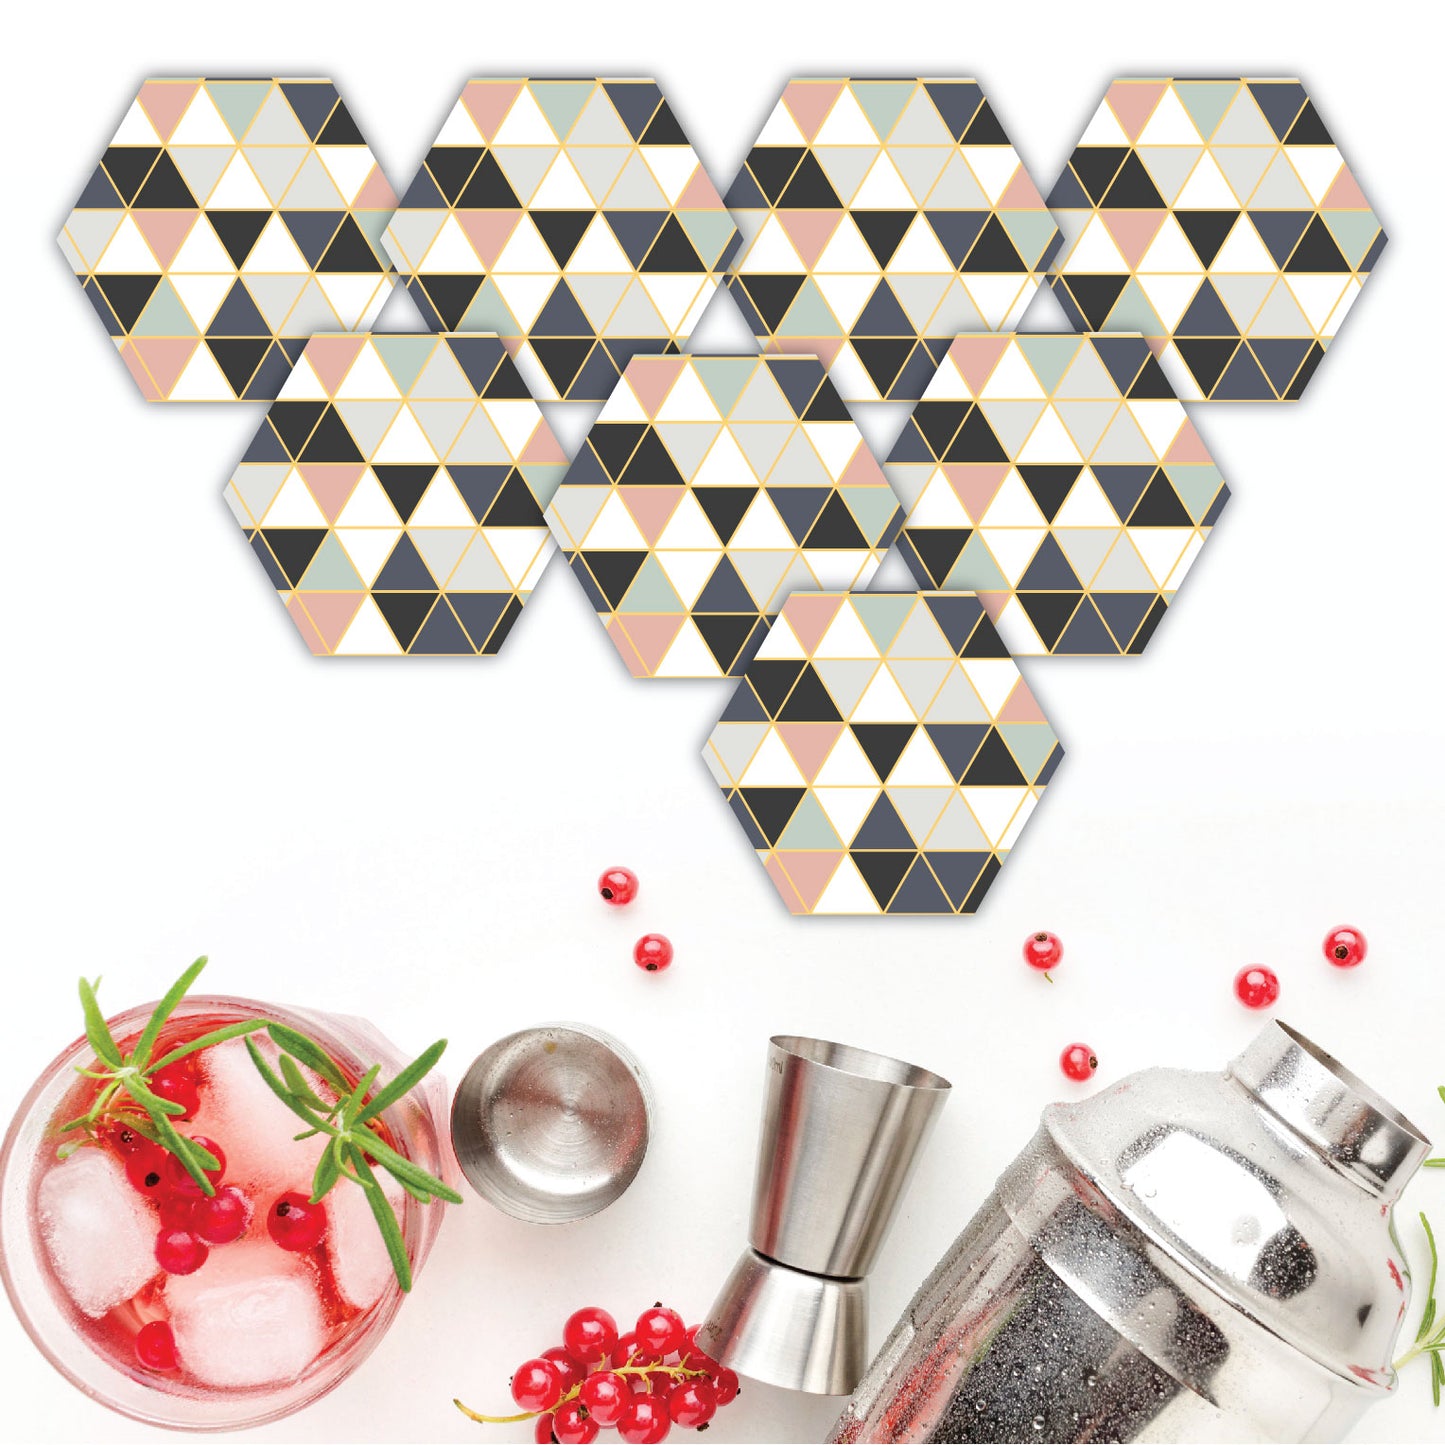 Hexagon Shape Coasters Set Of 8 Made Of Wood Tea Cups, Coffee Mugs & Bar Glasses